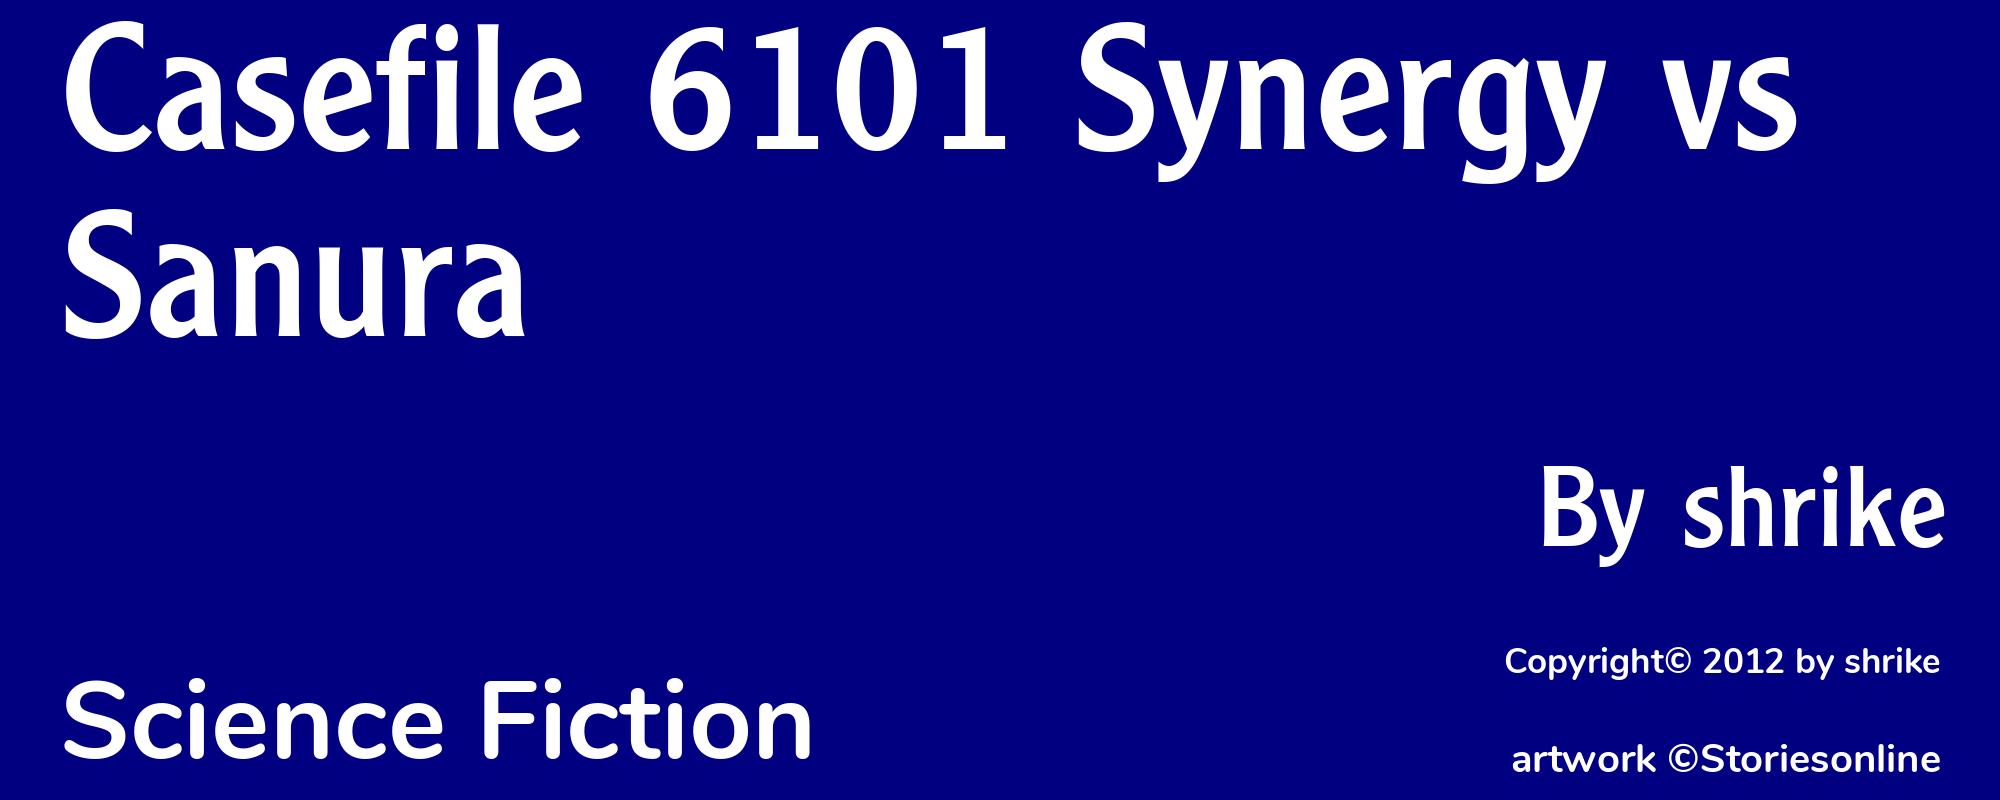 Casefile 6101 Synergy vs Sanura - Cover